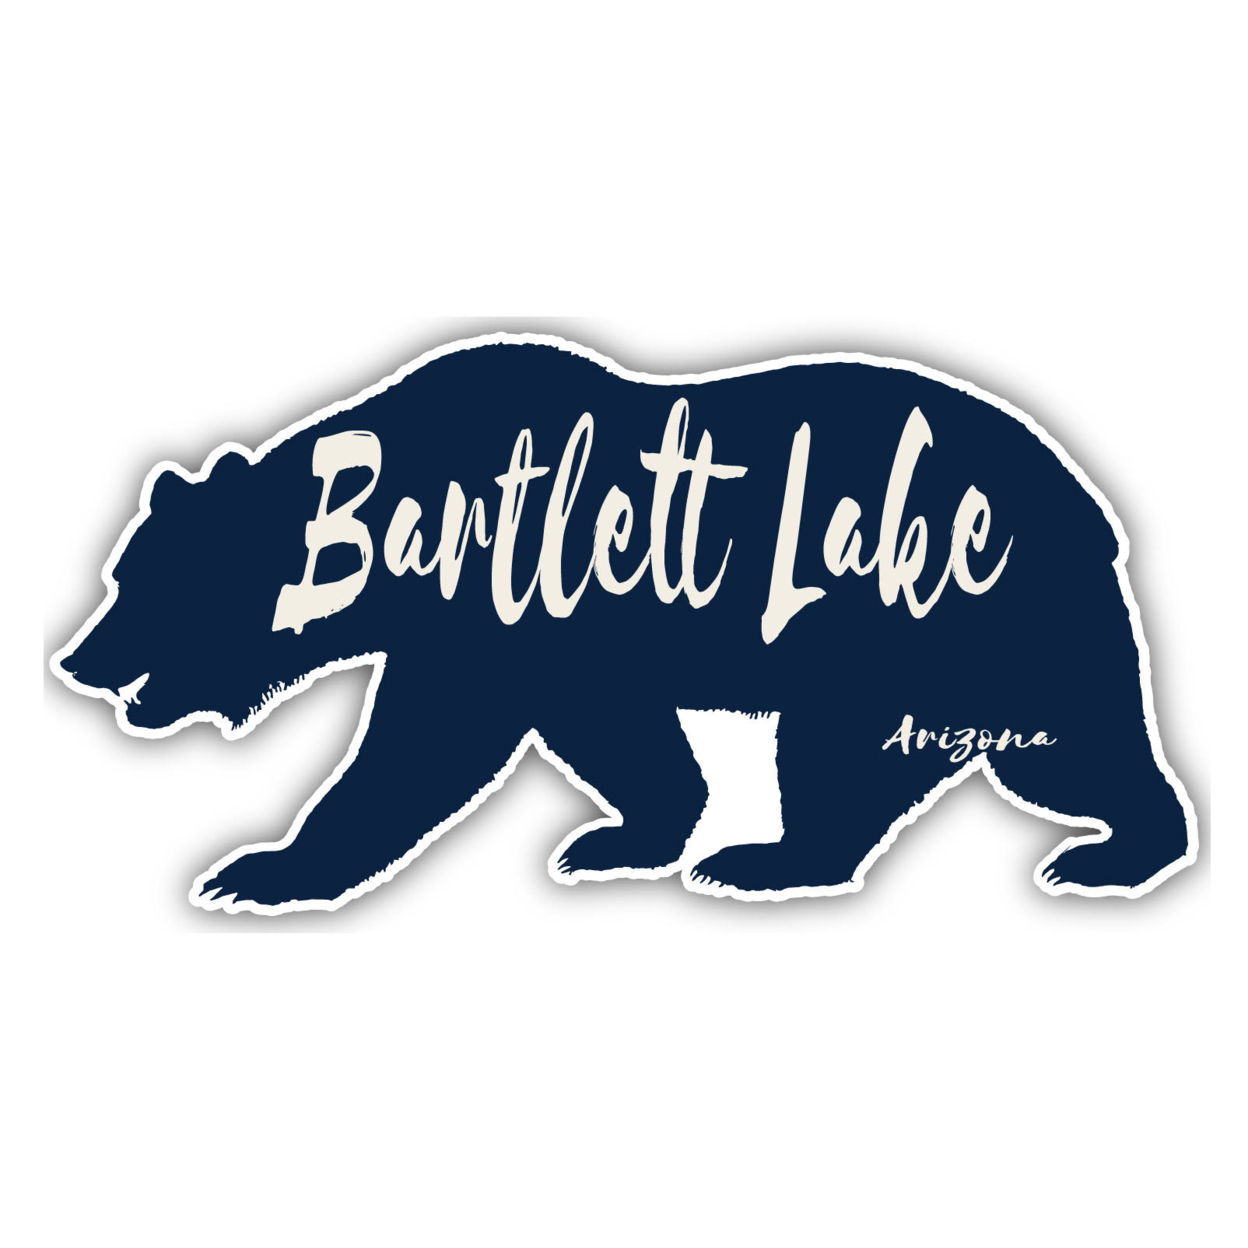 Bartlett Lake Arizona Souvenir Decorative Stickers (Choose Theme And Size) - Single Unit, 6-Inch, Camp Life